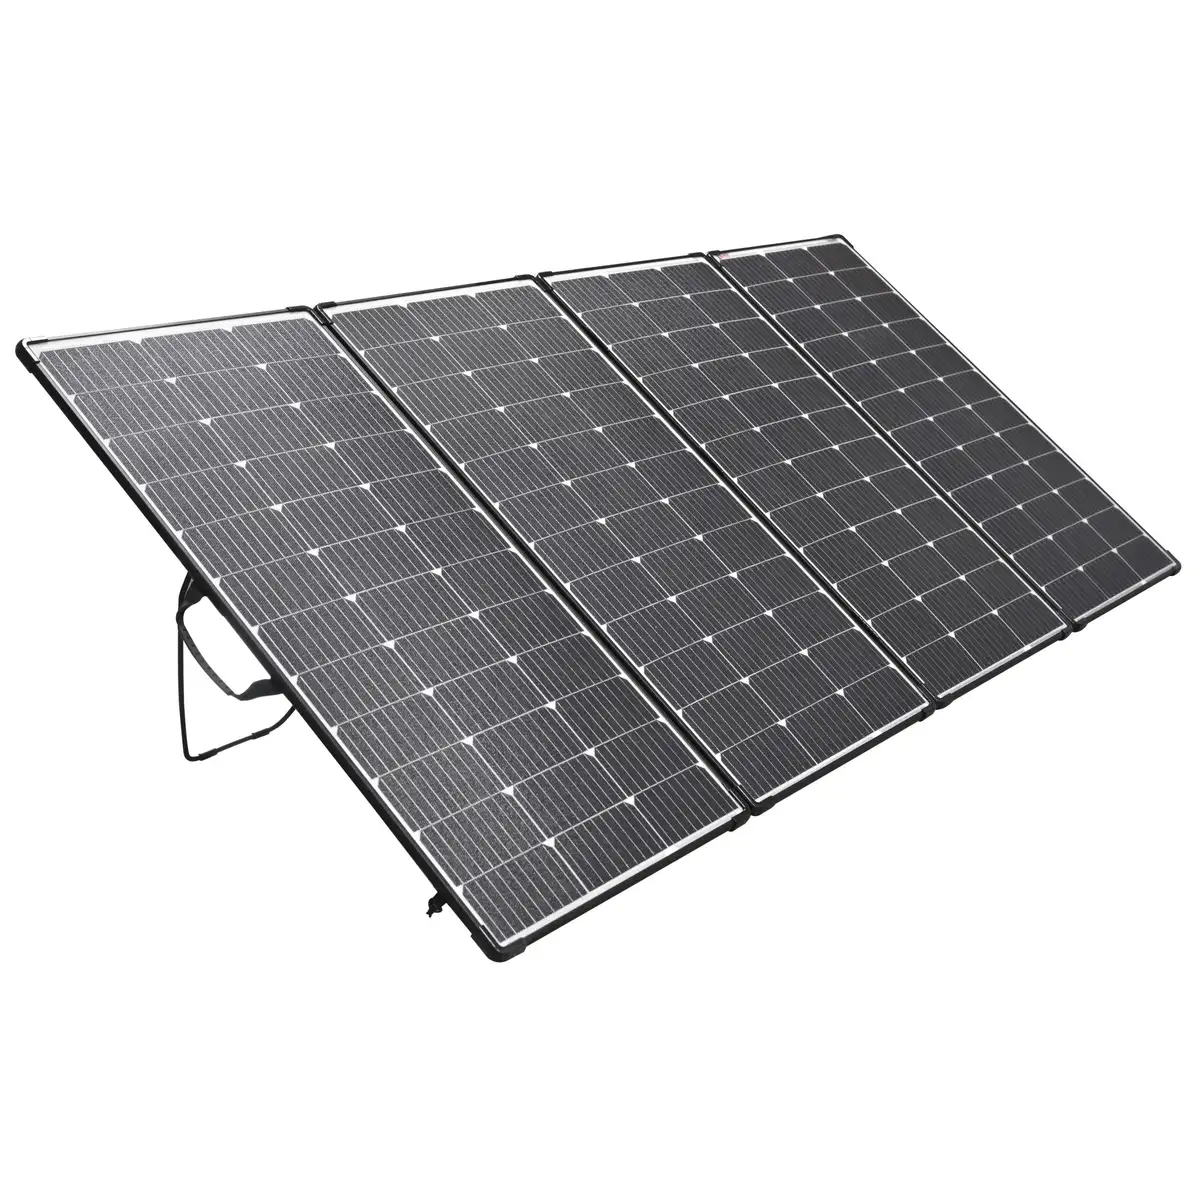 Excel Power 440W Portable Folding Solar Panel